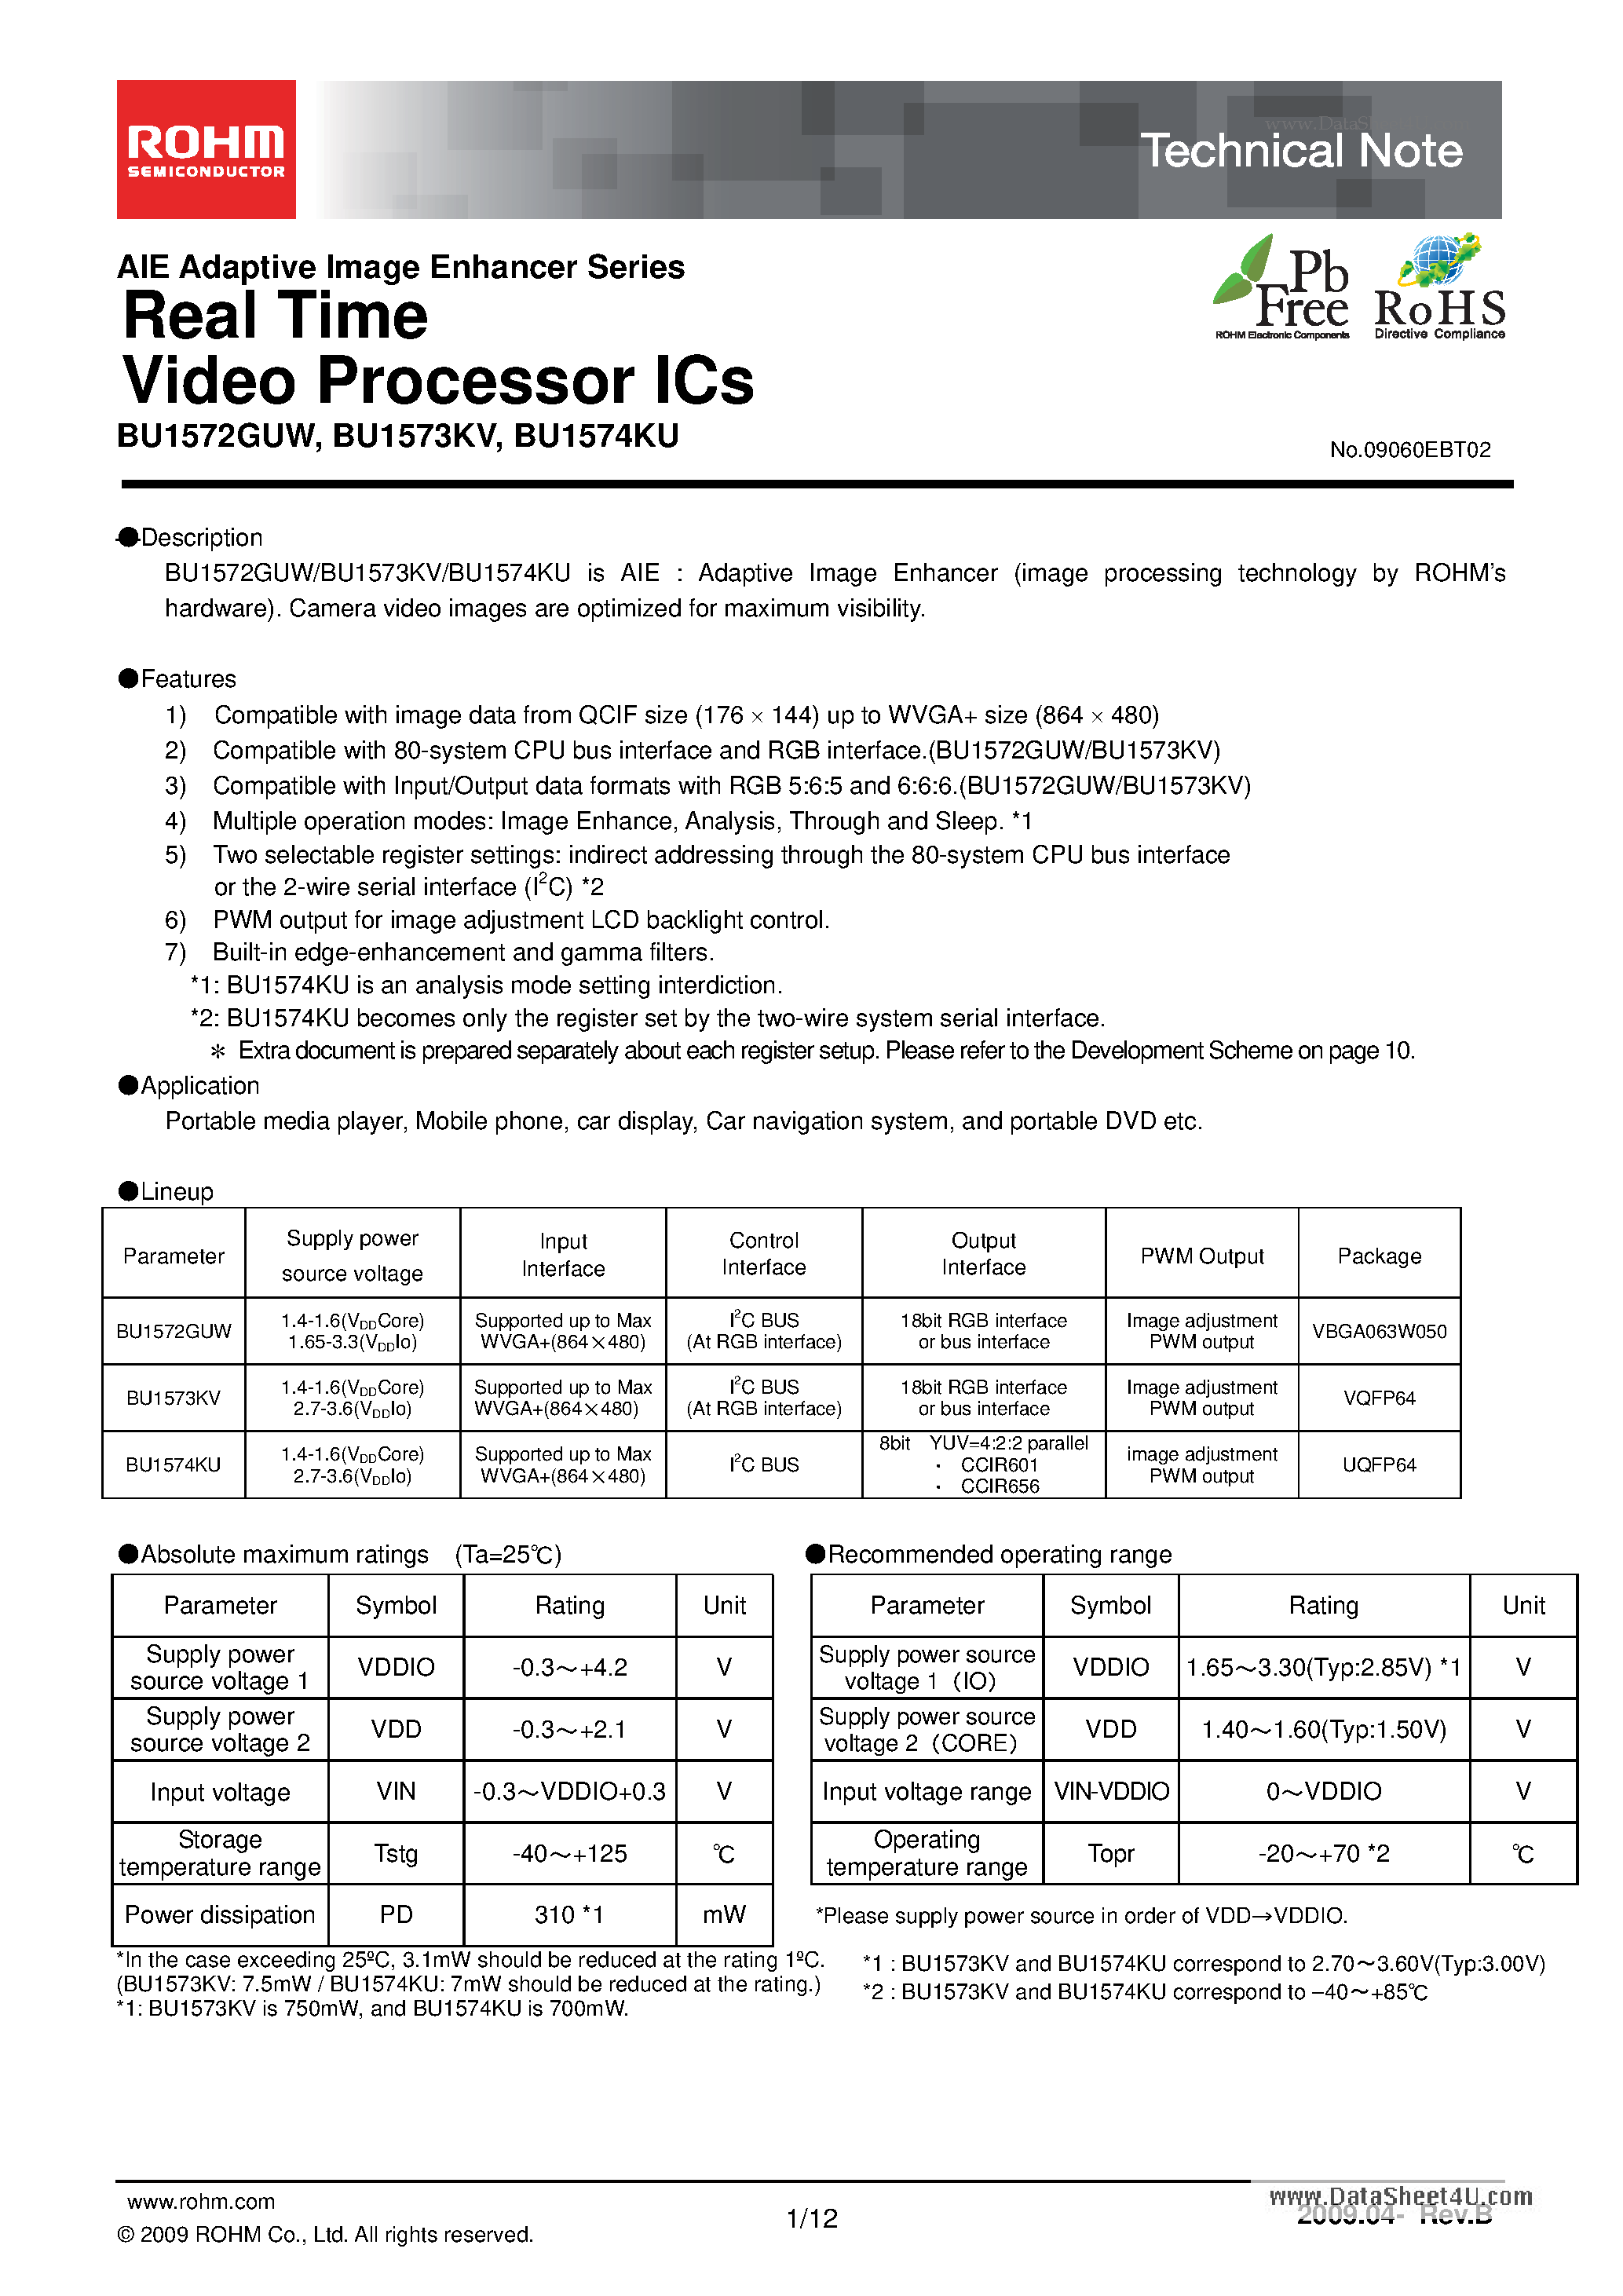 Даташит BU1573KV - Real Time Video Processor ICs страница 1